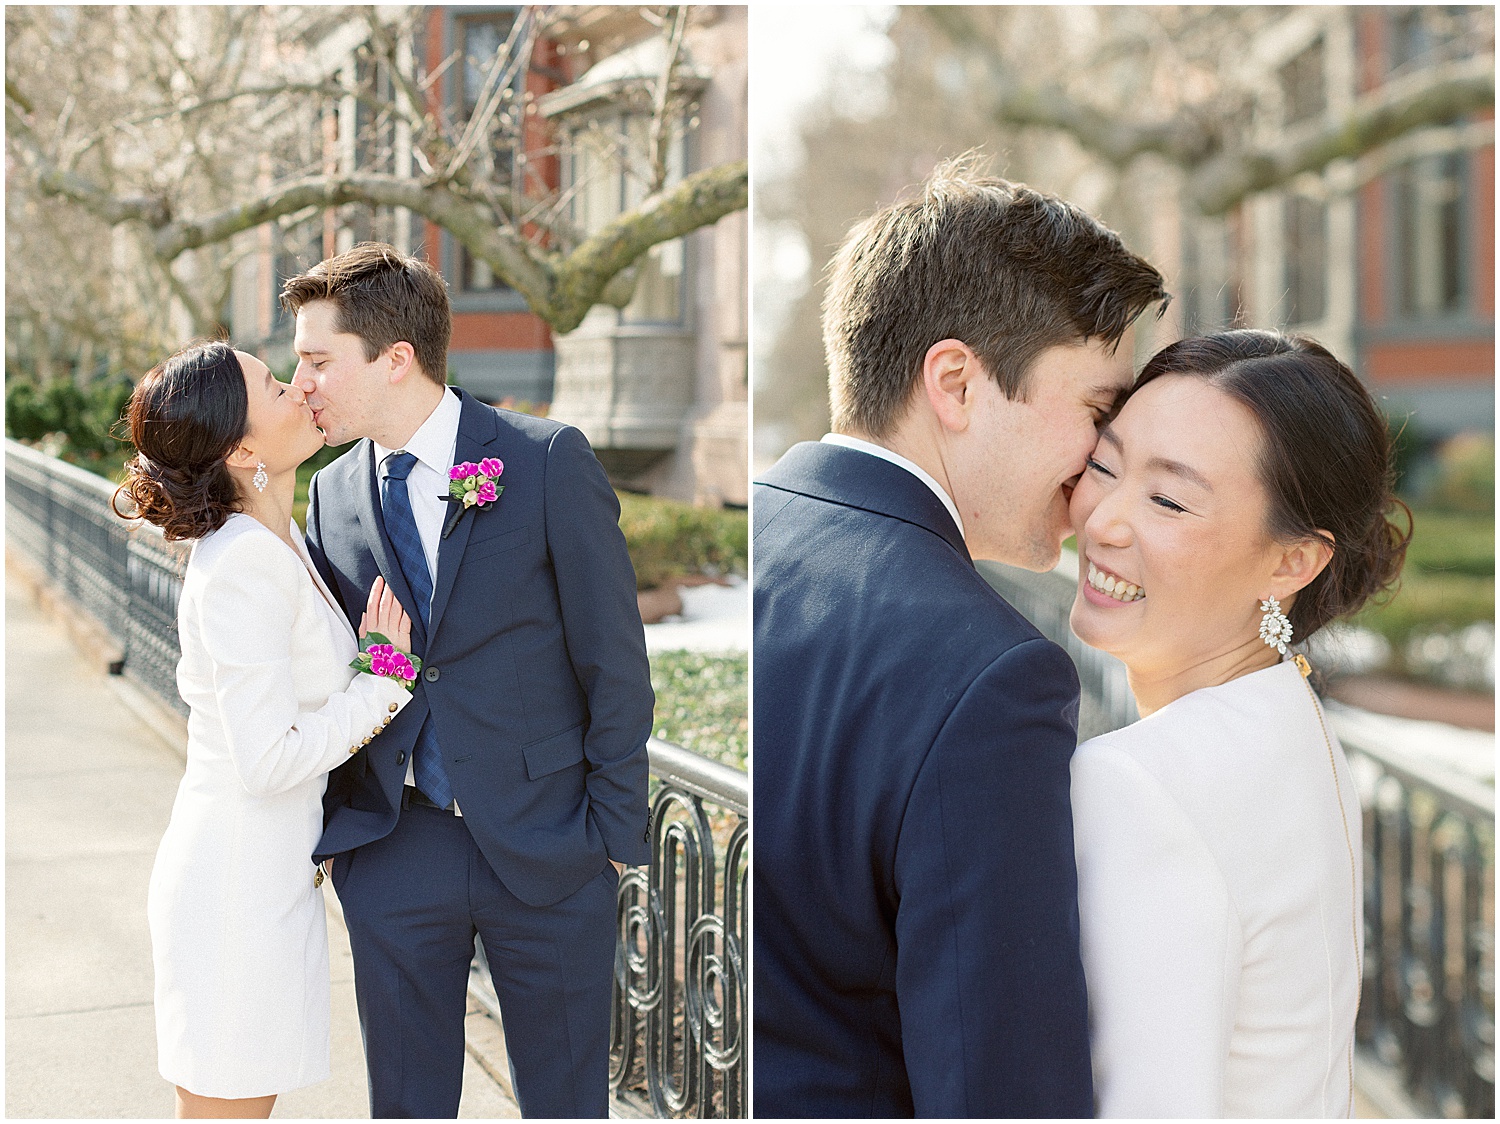 Winter elopement photos in downtown Boston